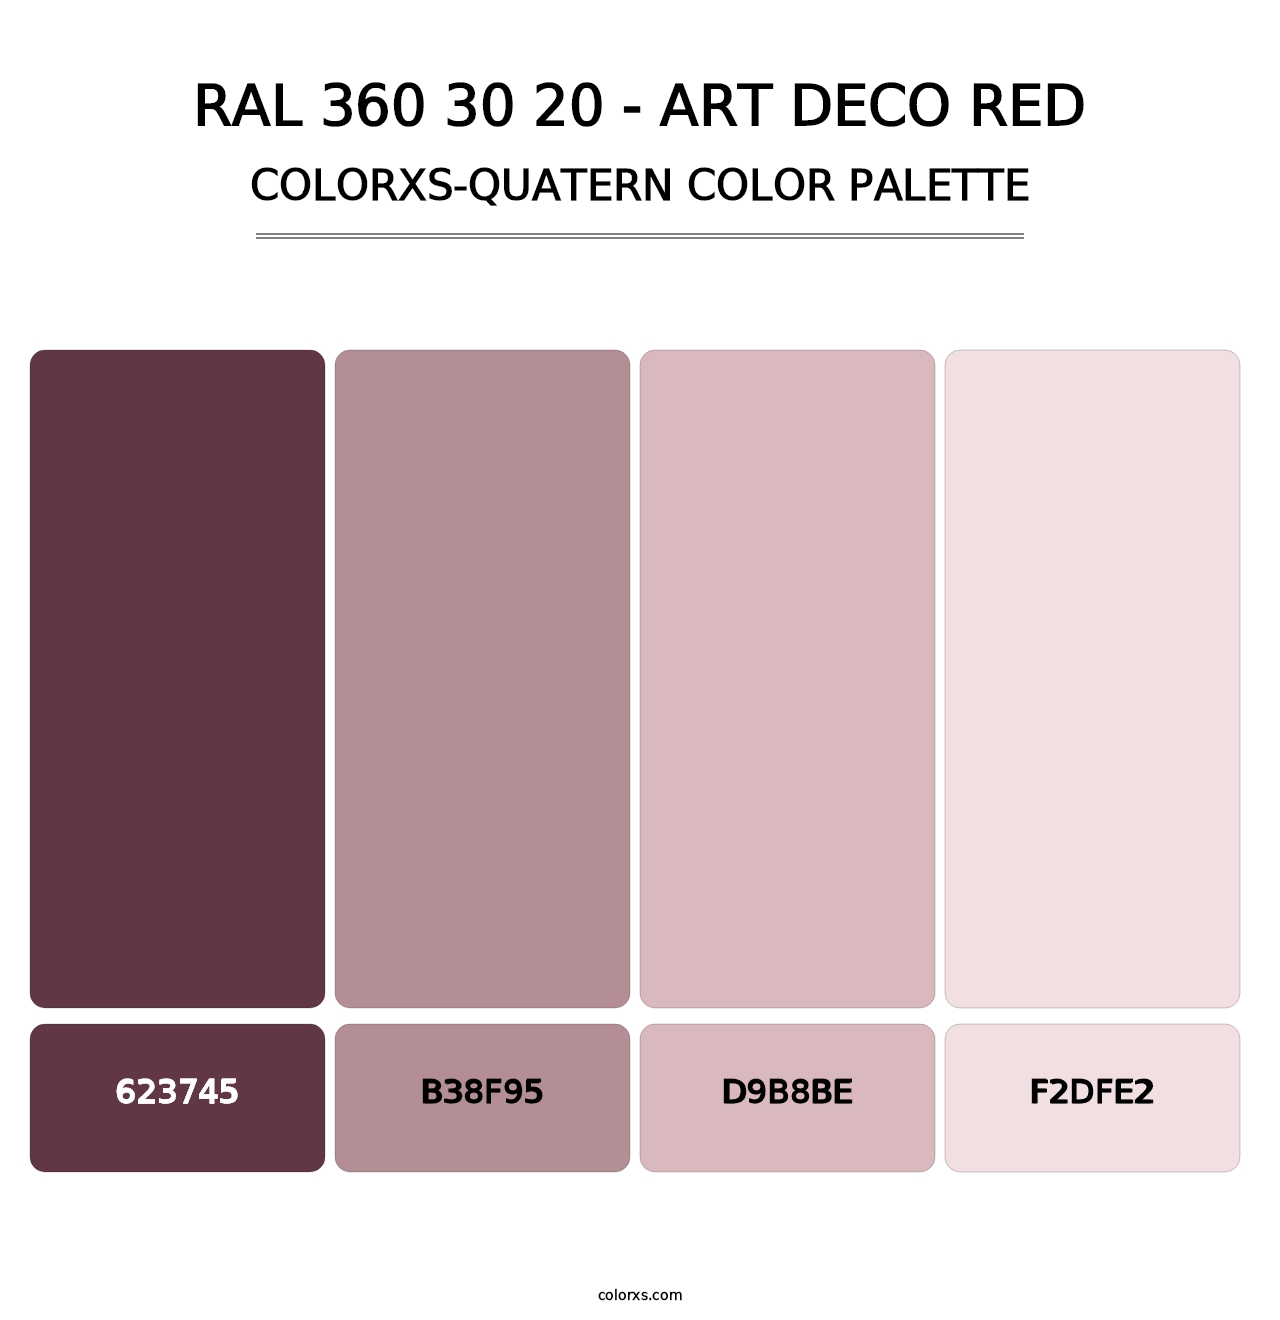 RAL 360 30 20 - Art Deco Red - Colorxs Quatern Palette